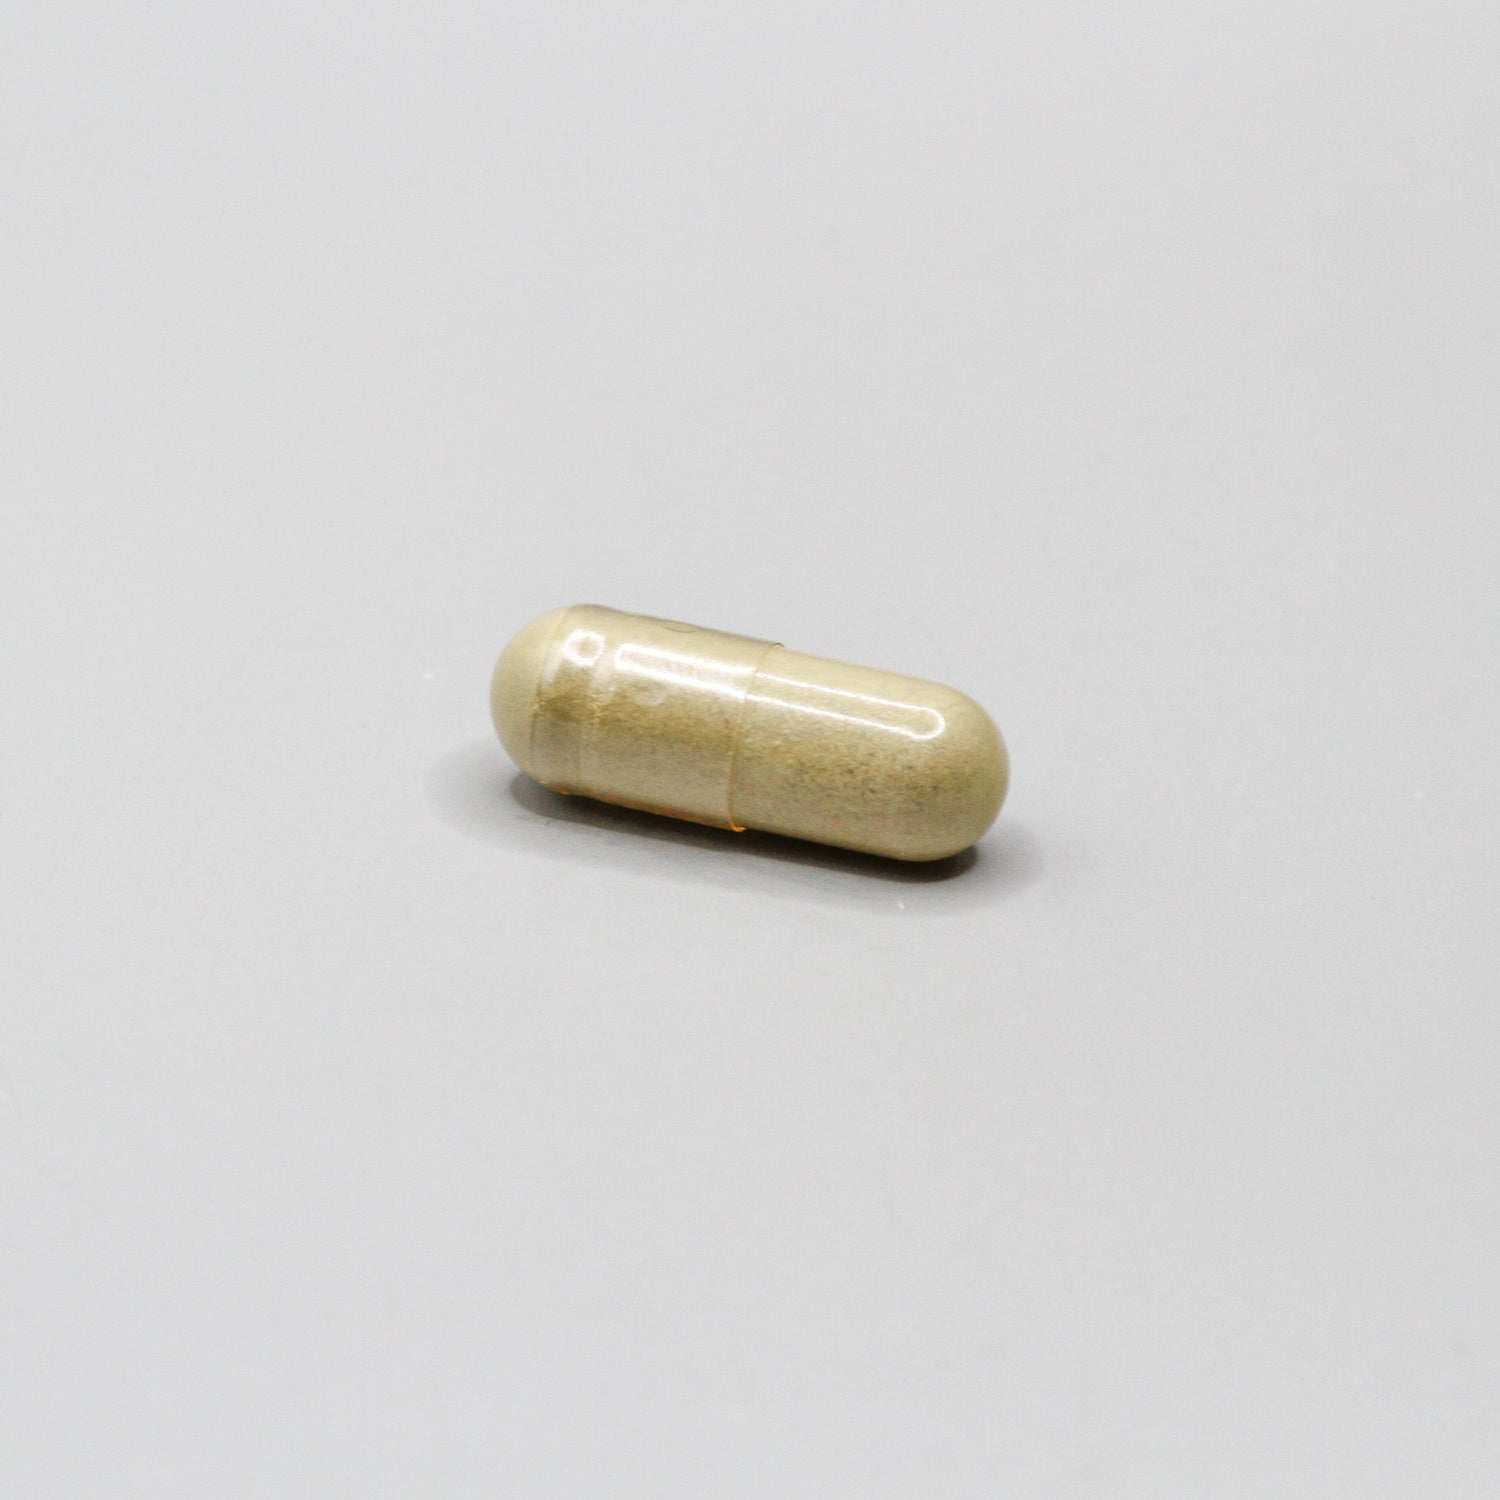 Yellow pill